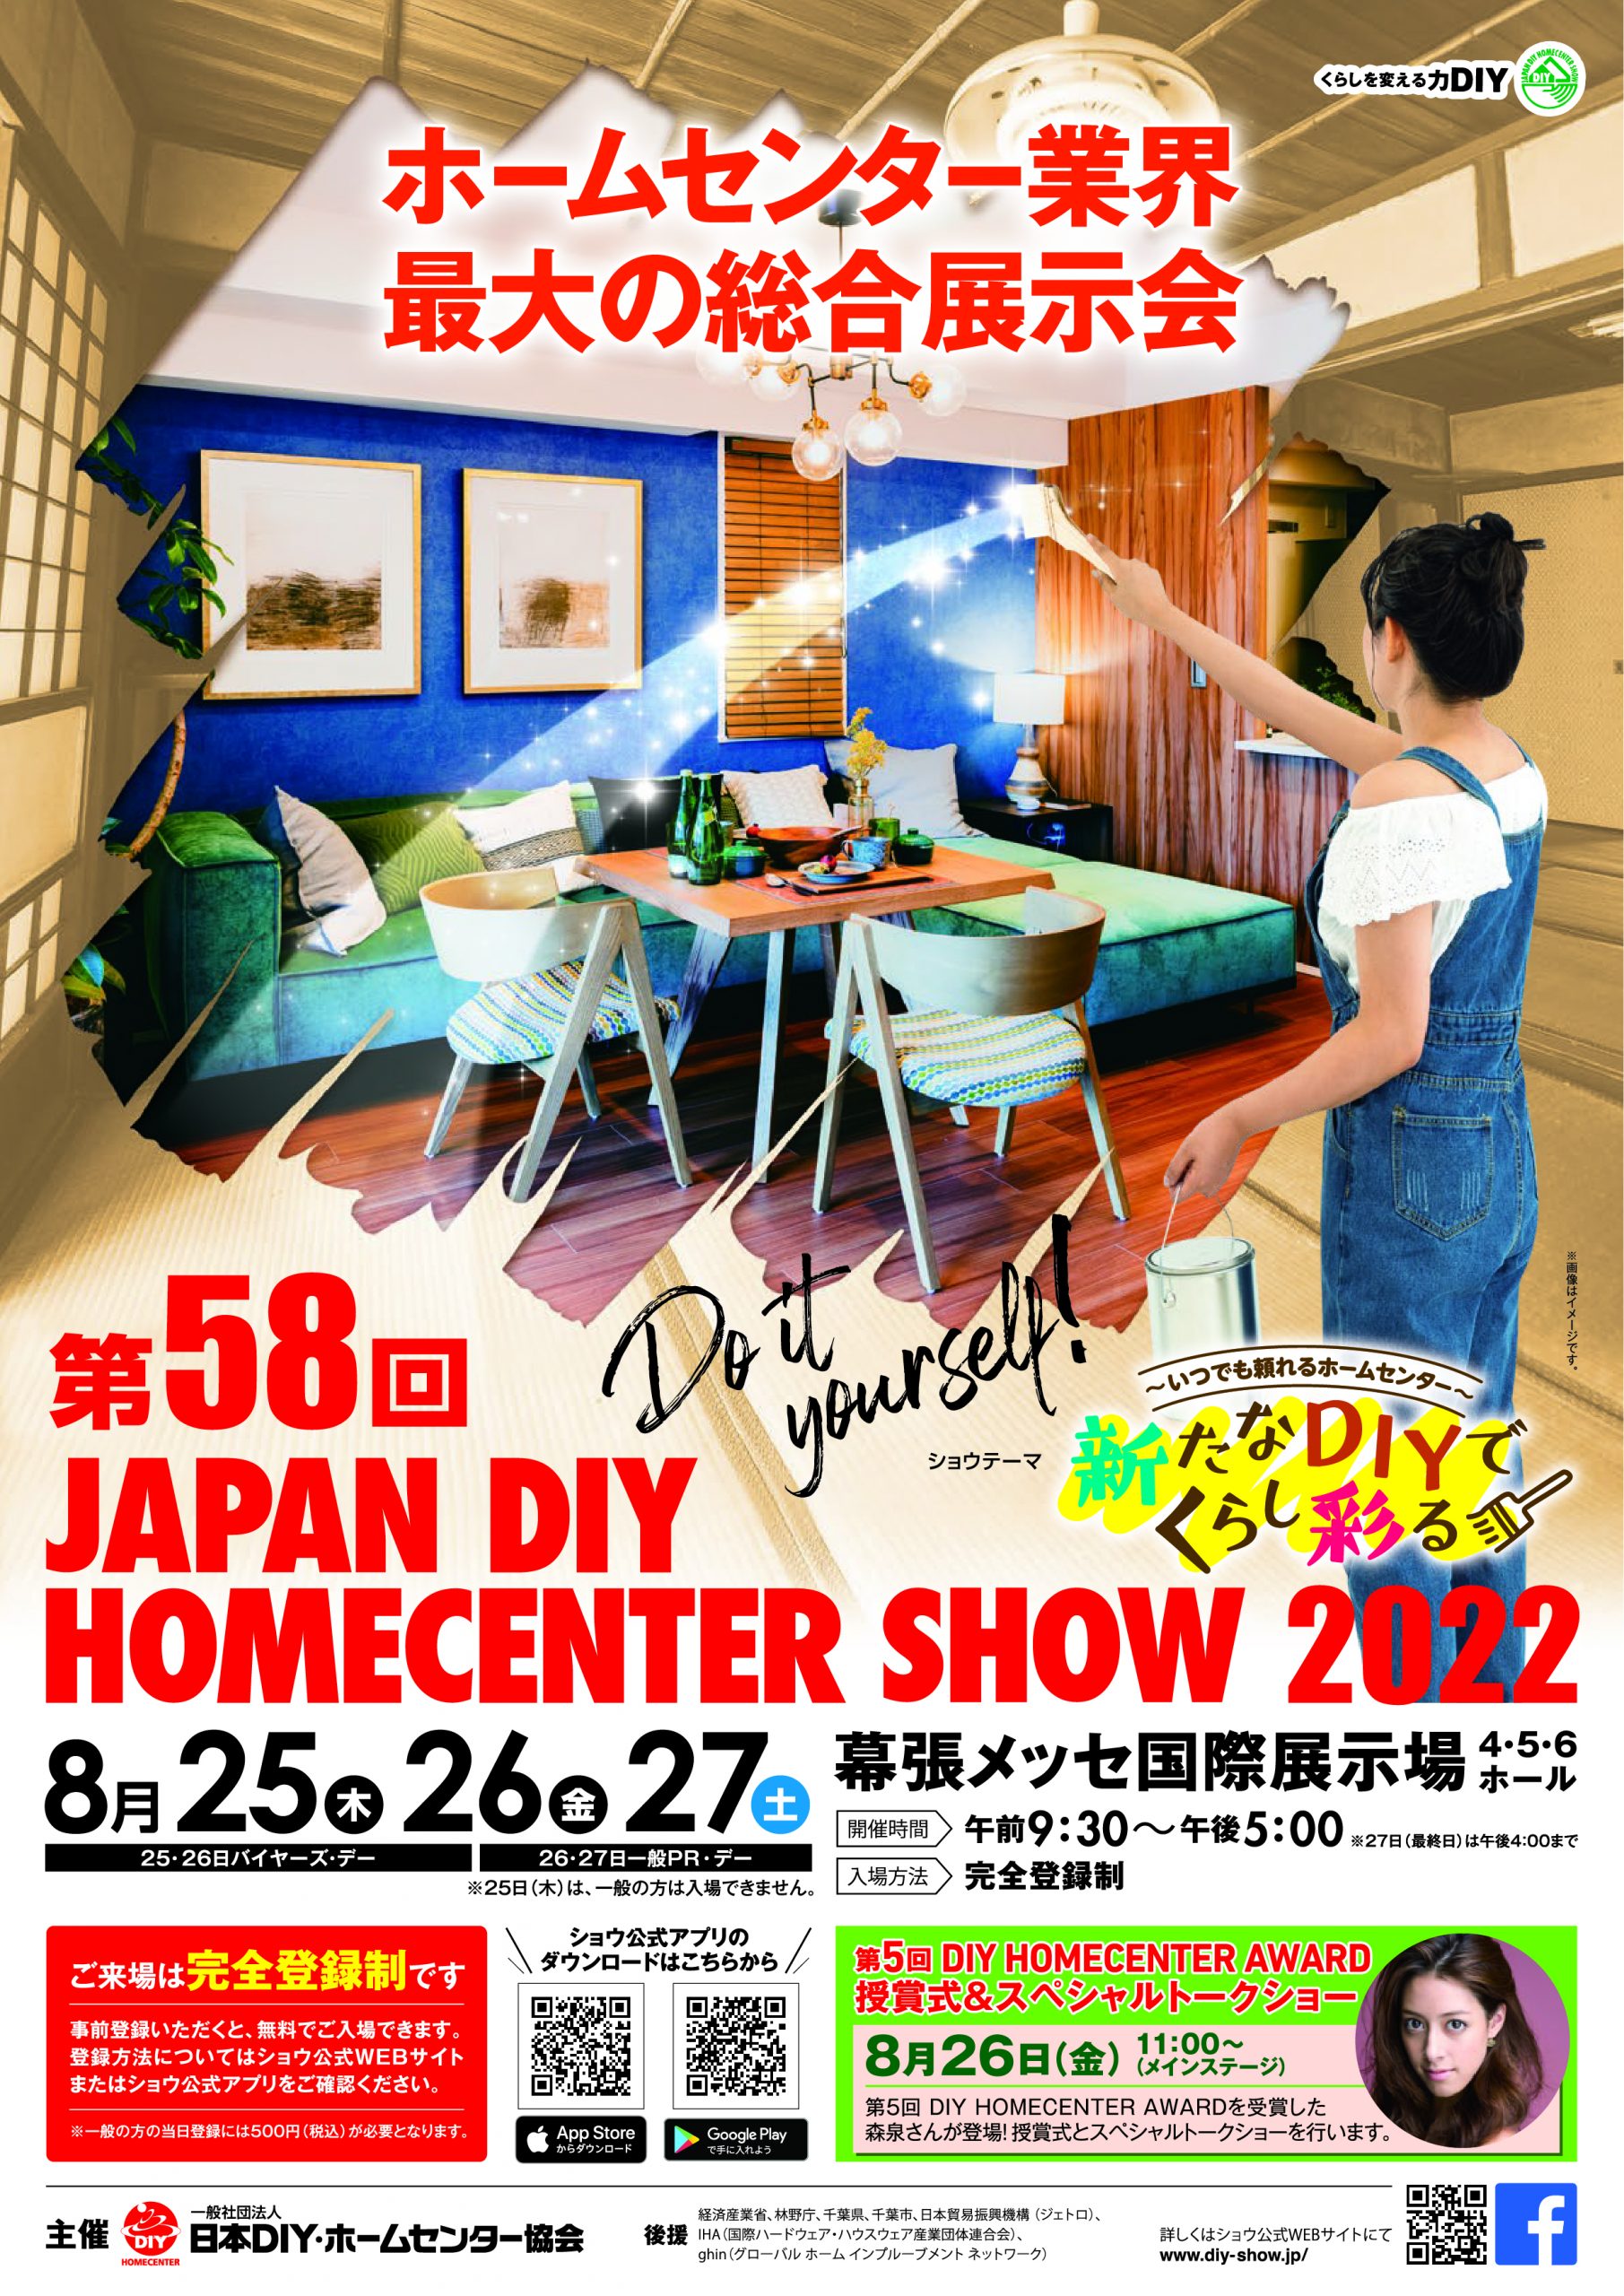 JAPAN DIY HOMECENTER SHOW 2022